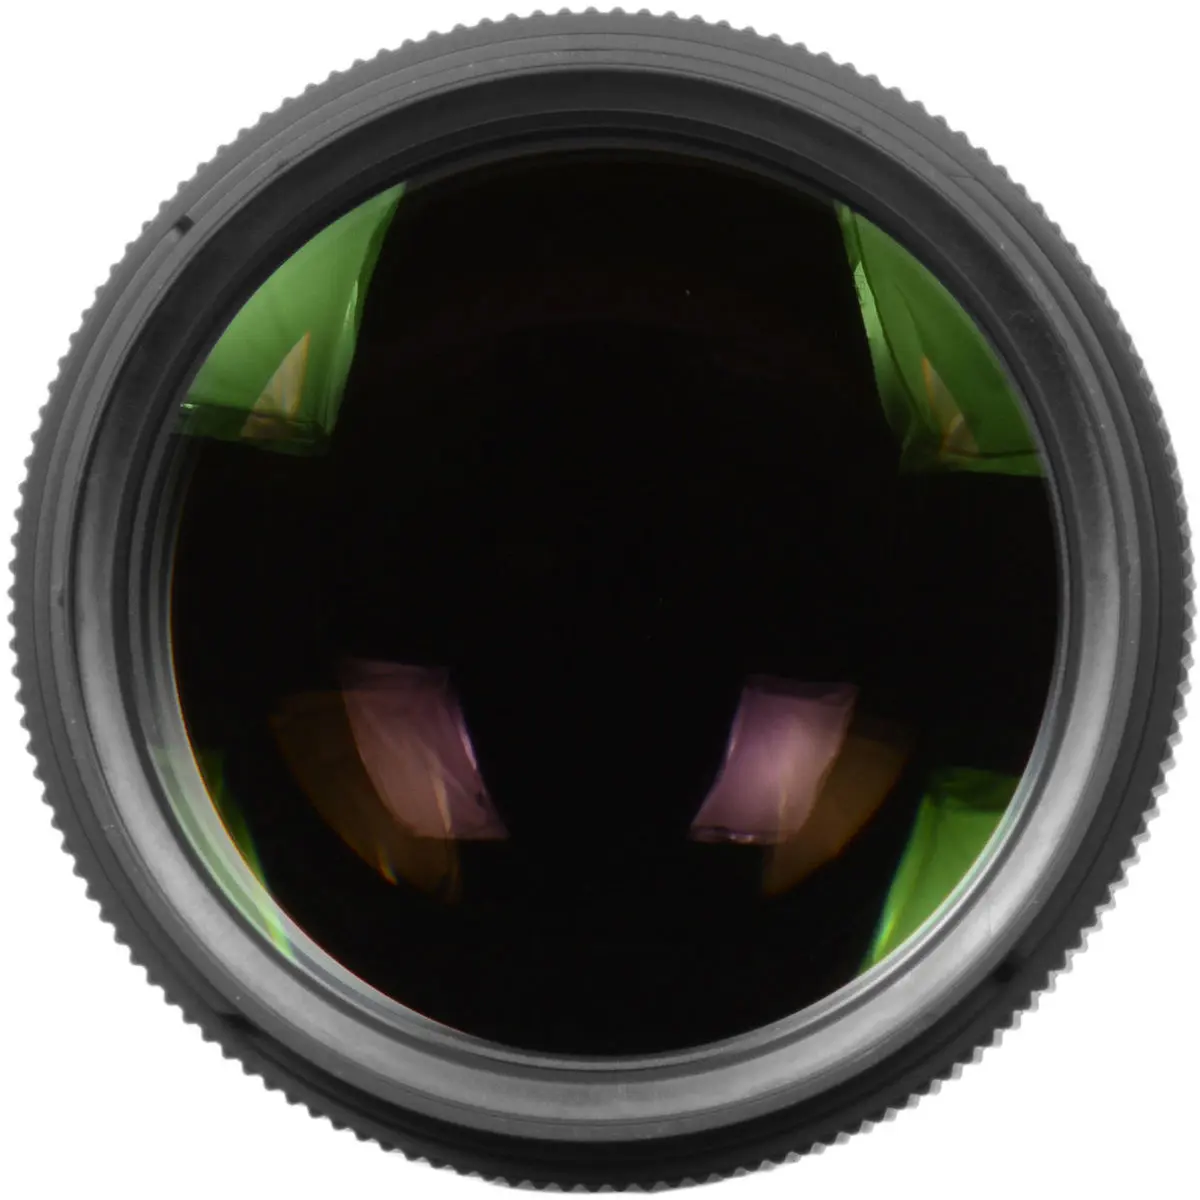 2. Sigma 135mm F1.8 DG HSM | Art (Nikon) Lens